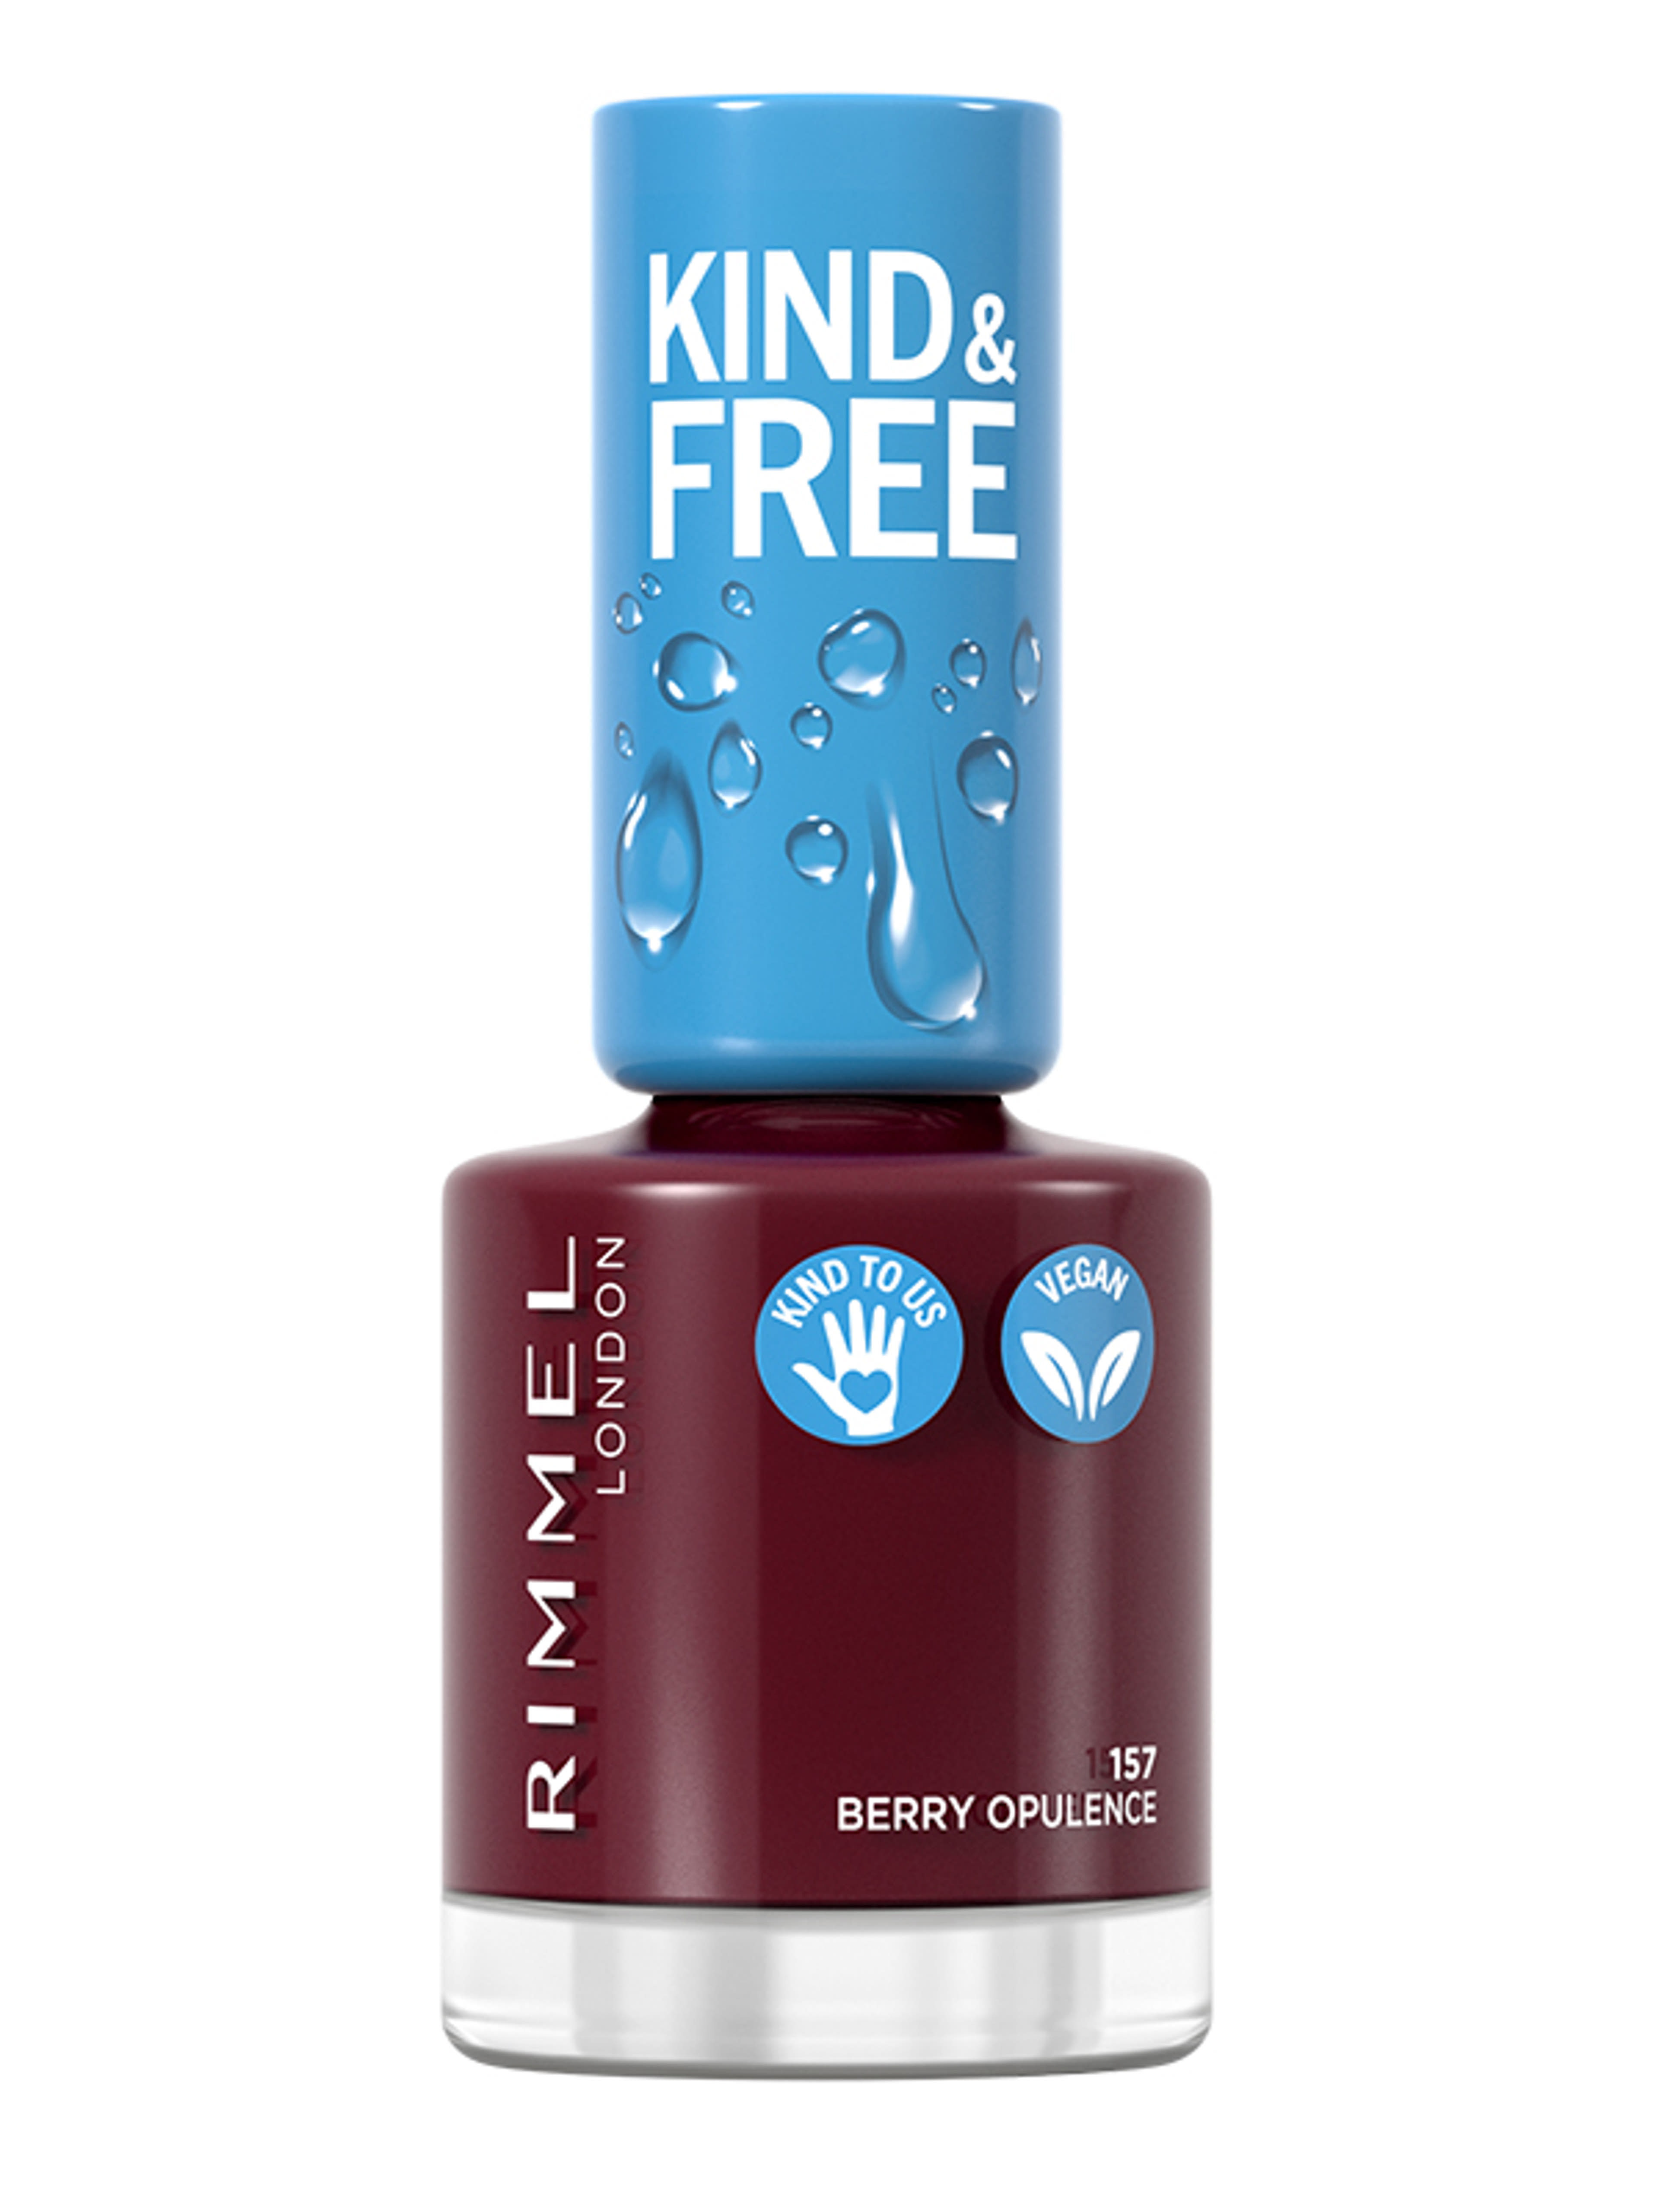 Rimmel Kind&Free lakk /157 - 1 db-2